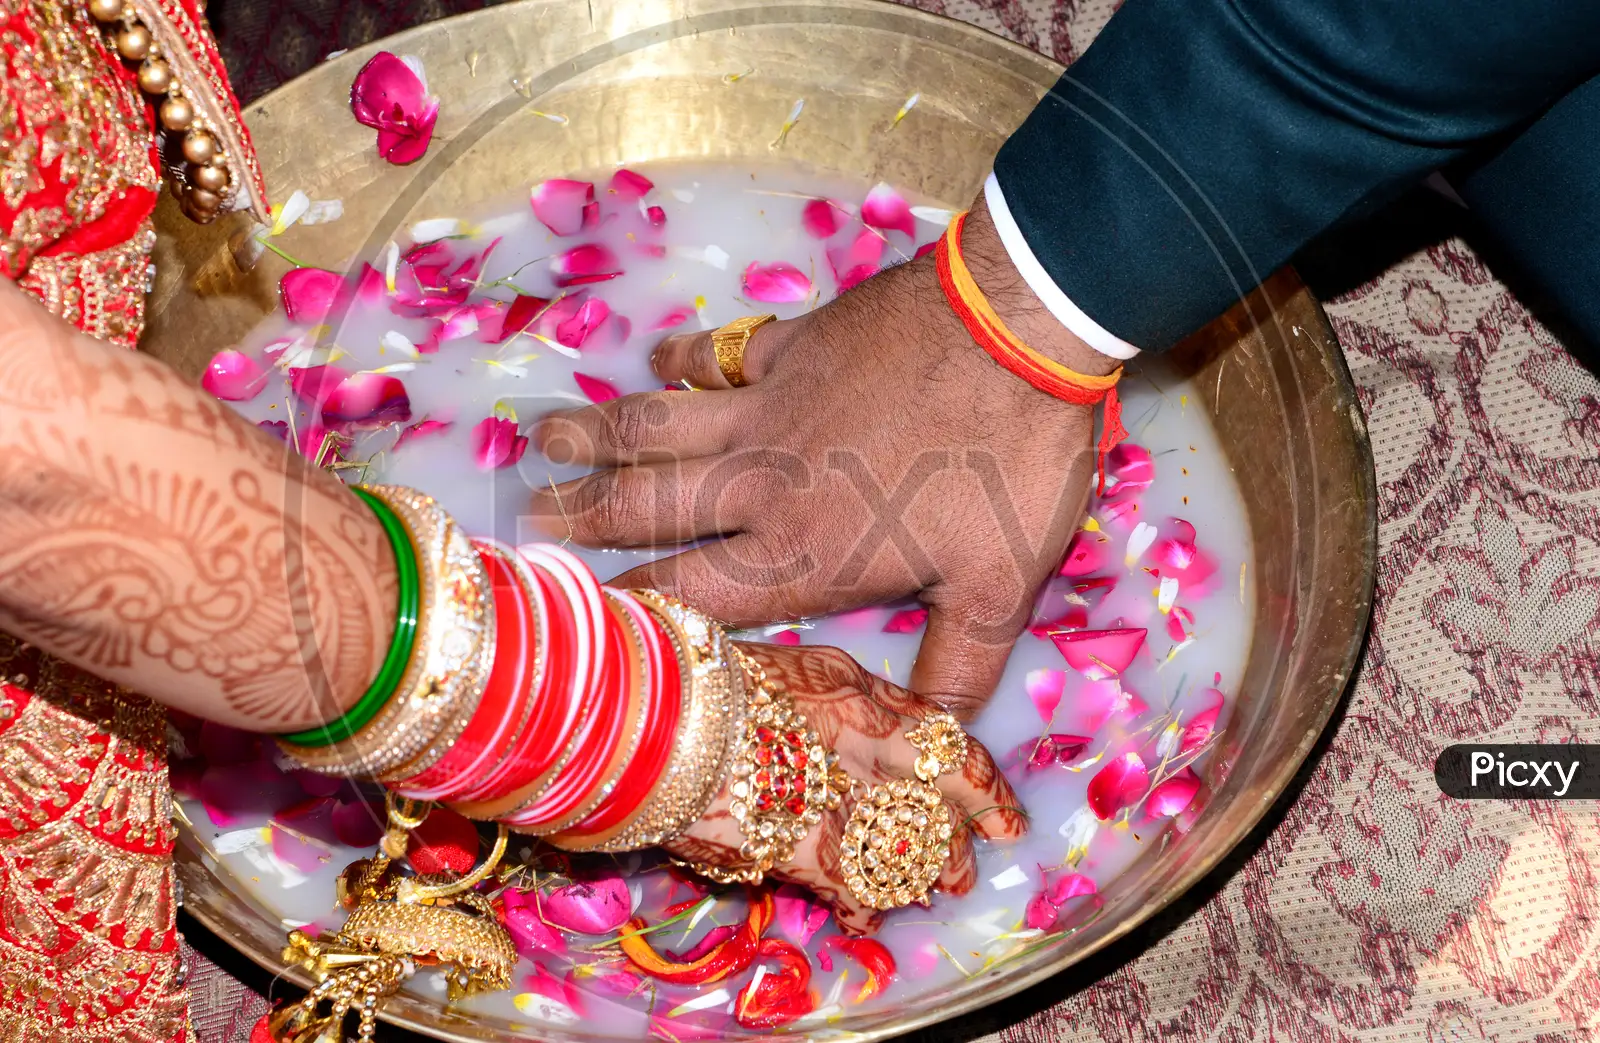 Finding Wedding Ring in Milk Ceremony | TikTok